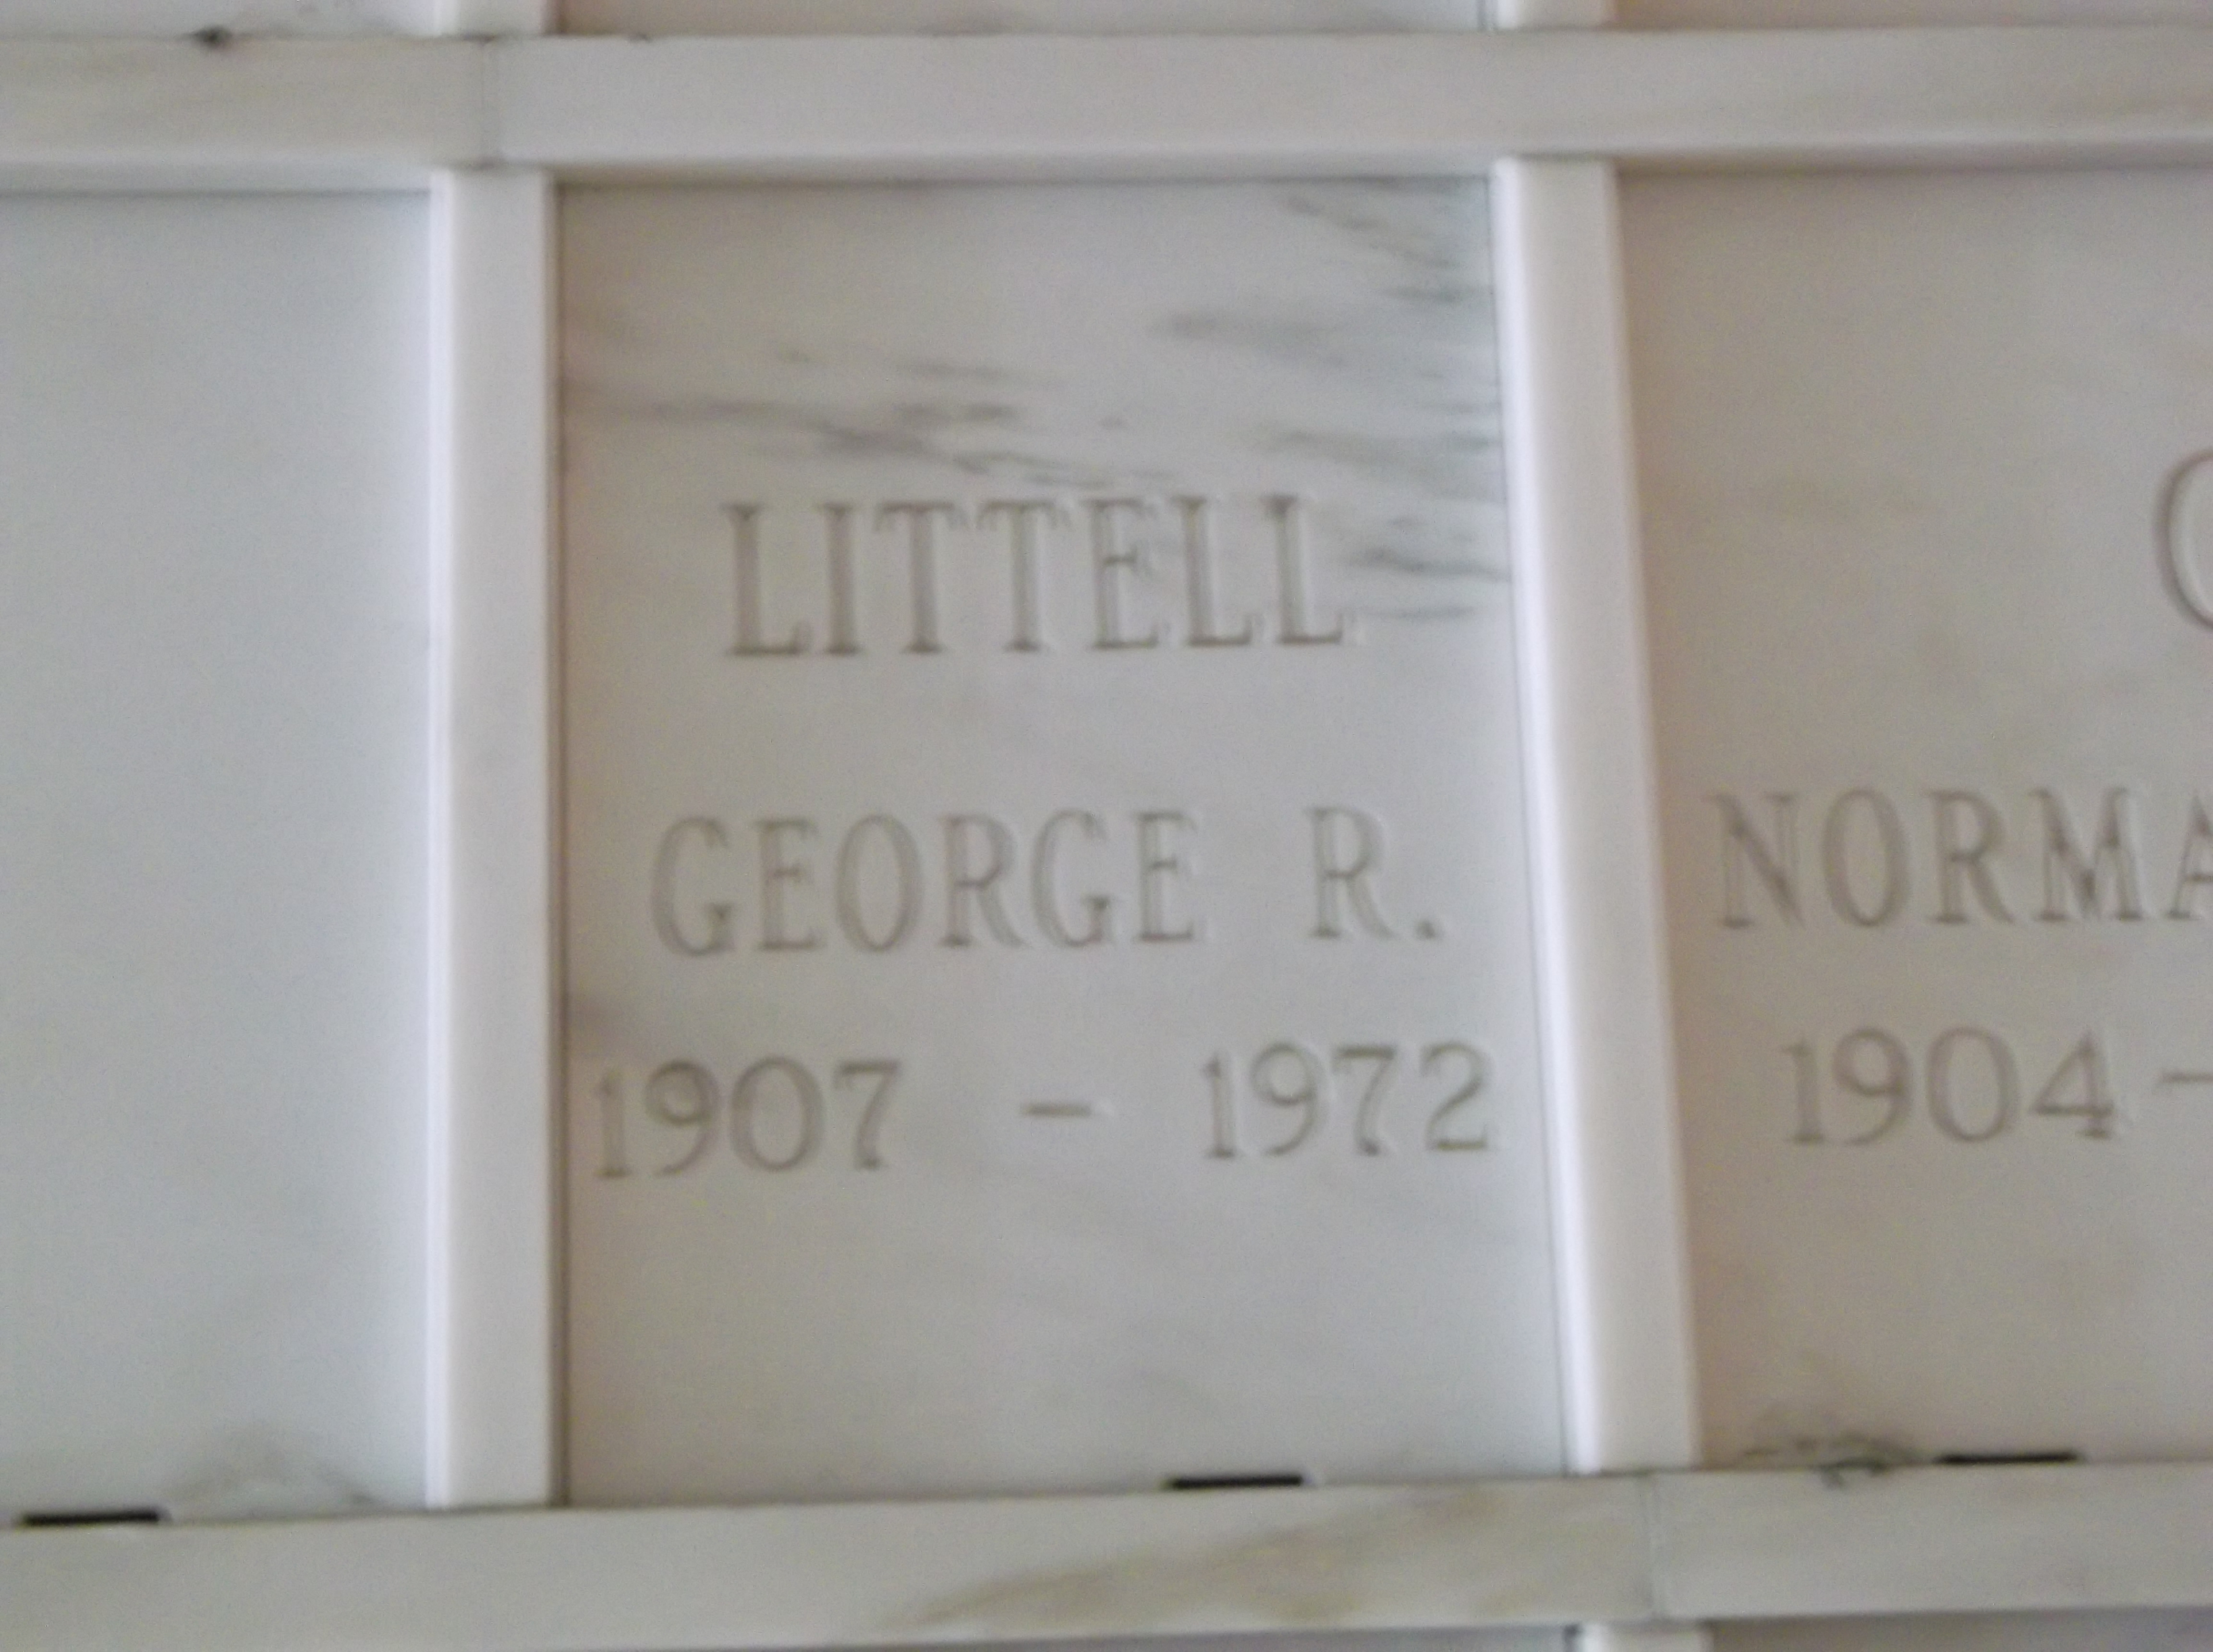 George R Littell